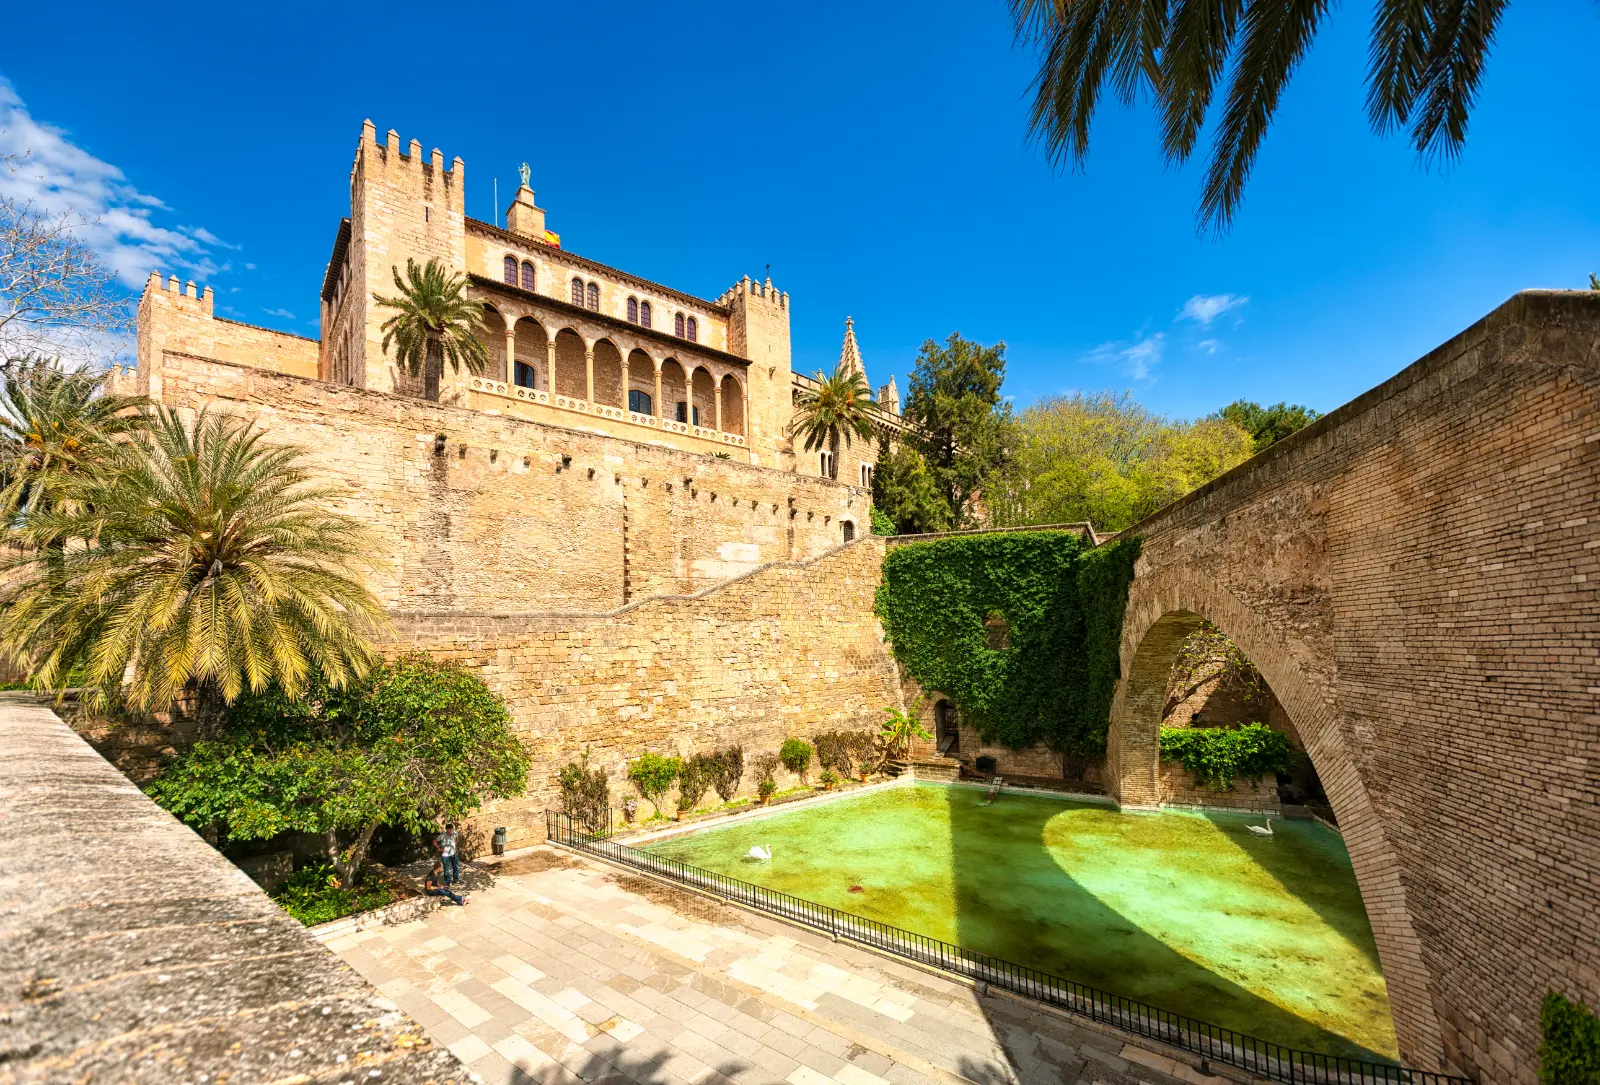 Palau de Almudaina, royalt palads i Palma by, på øen Mallorca i Spanien.